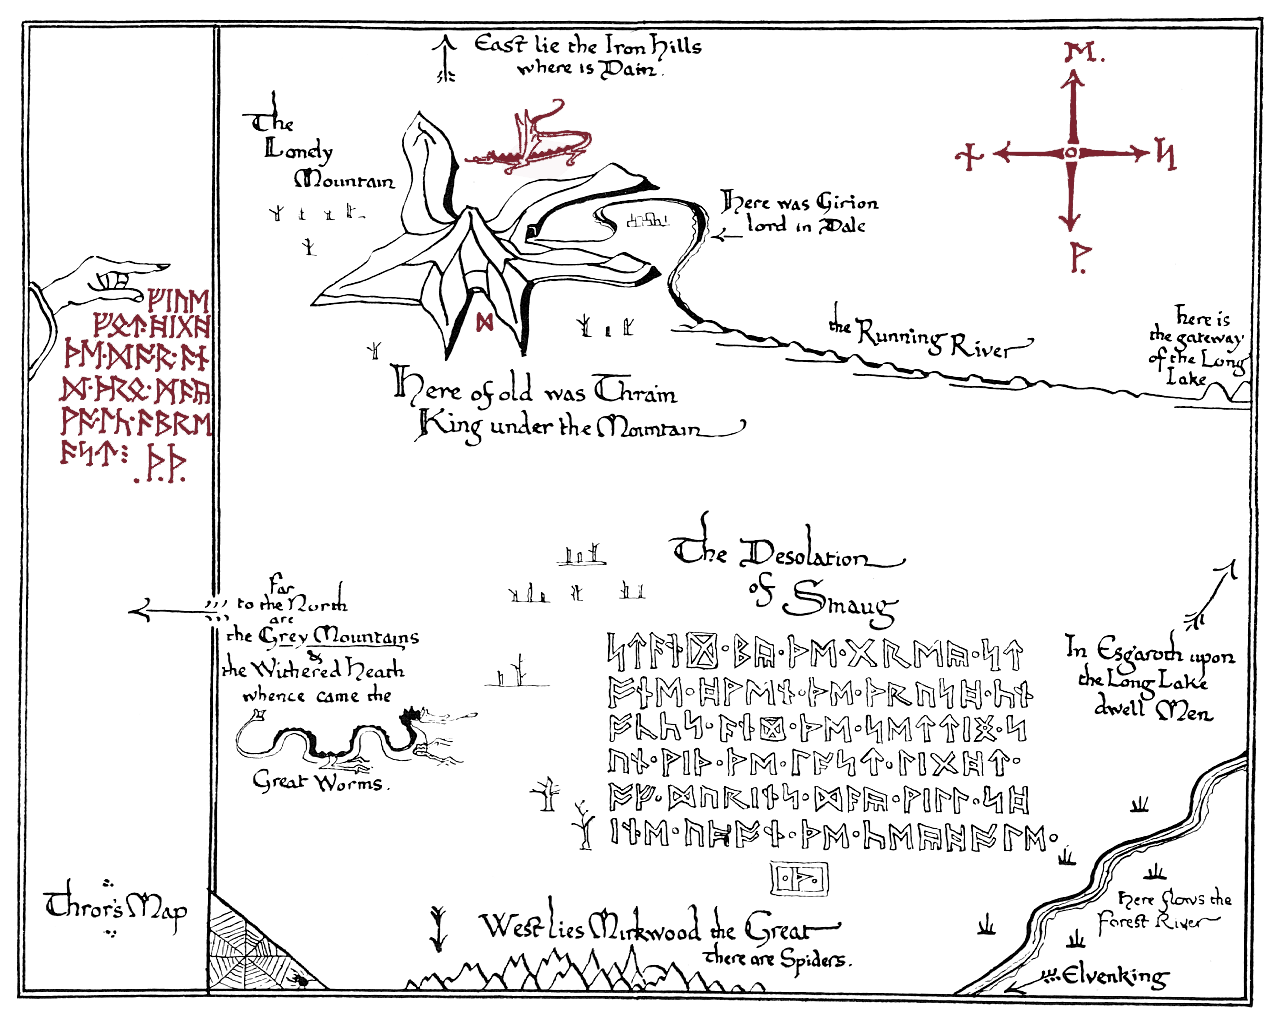 Thror's Map - The Hobbit (J.R.R. Tolkien)